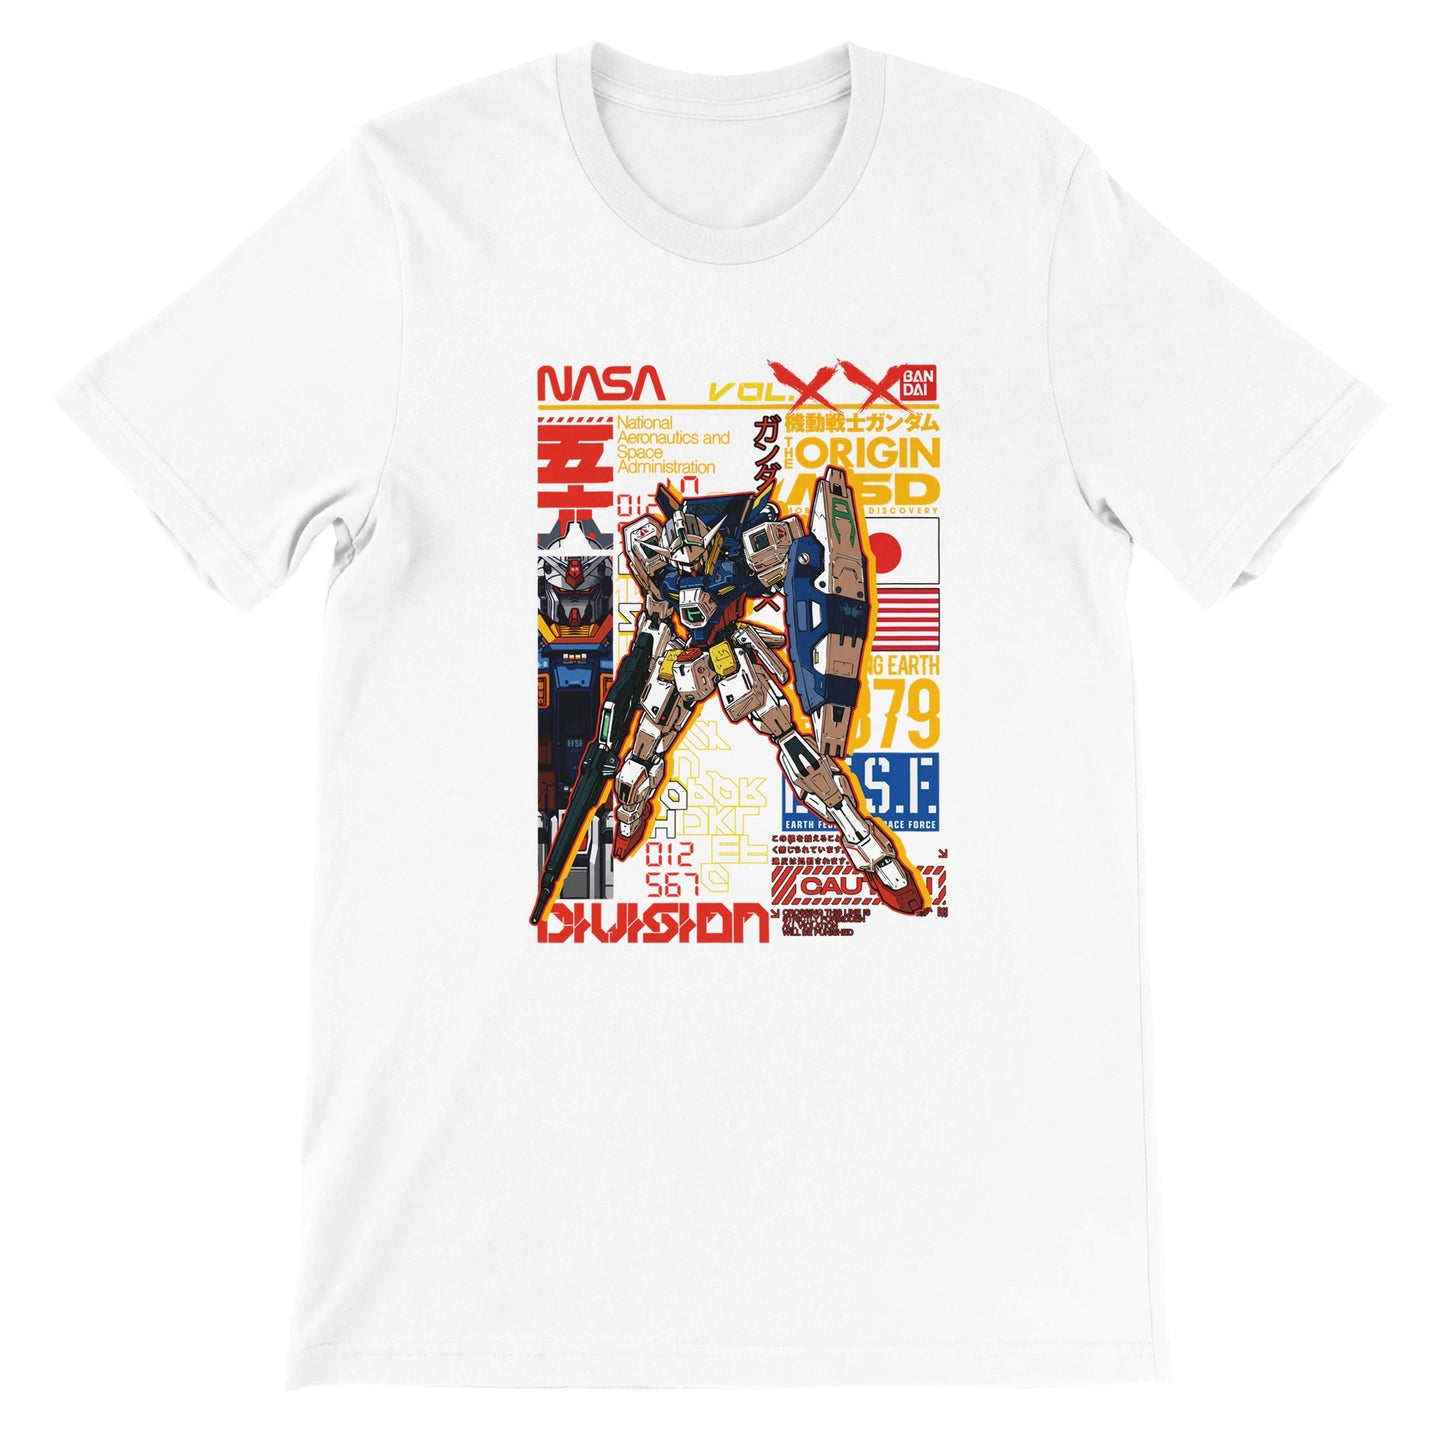 Gundam T-Shirt - Gundam Artwork Vol 2 - Premium Unisex T-Shirt 